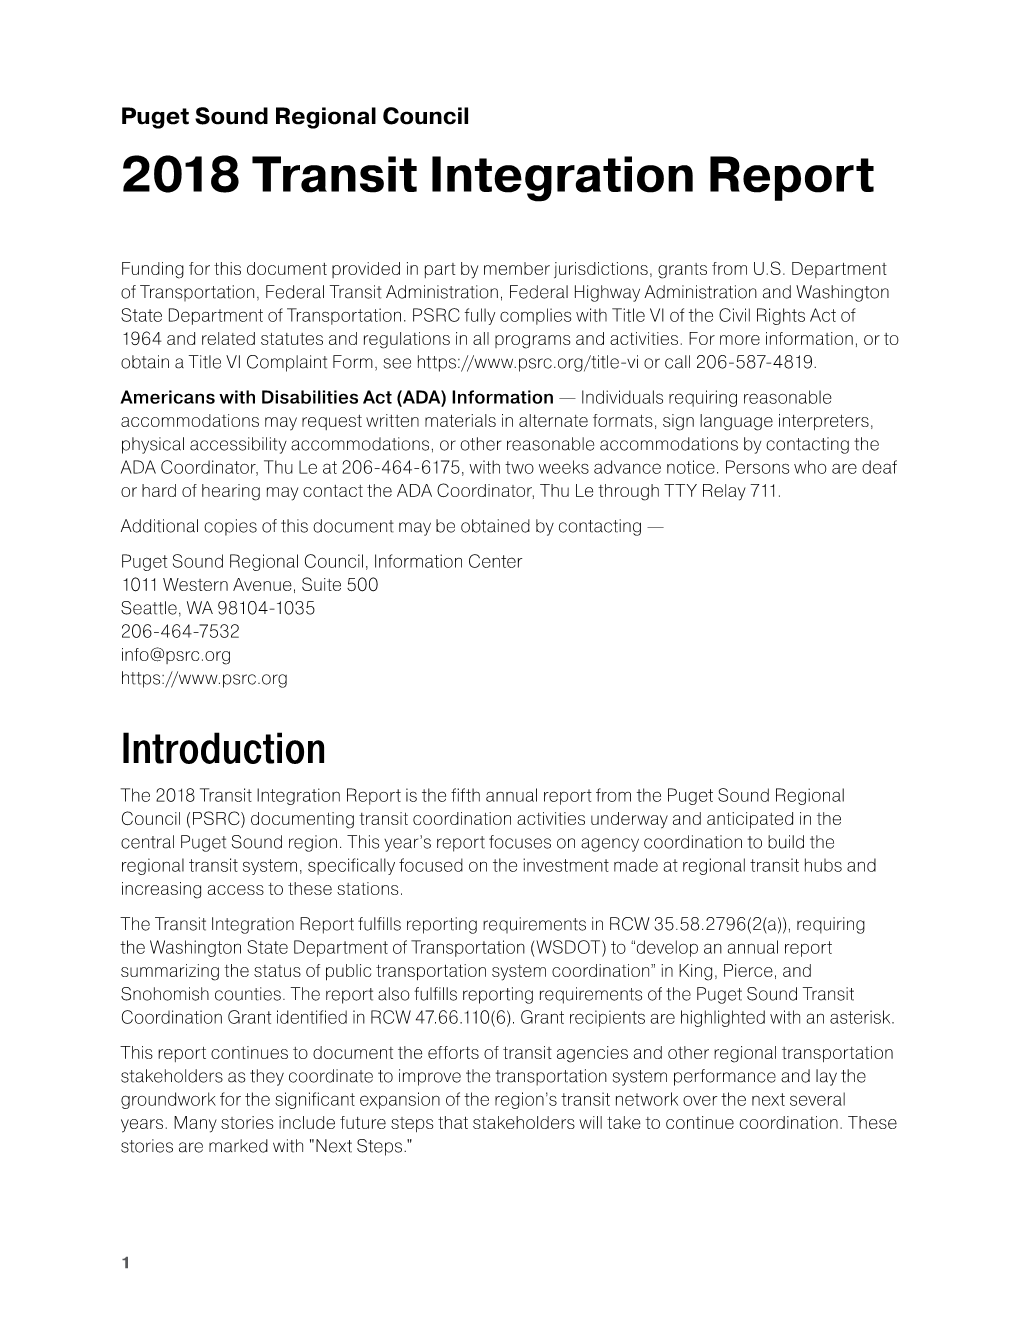 2018 Transit Integration Report. November 2018